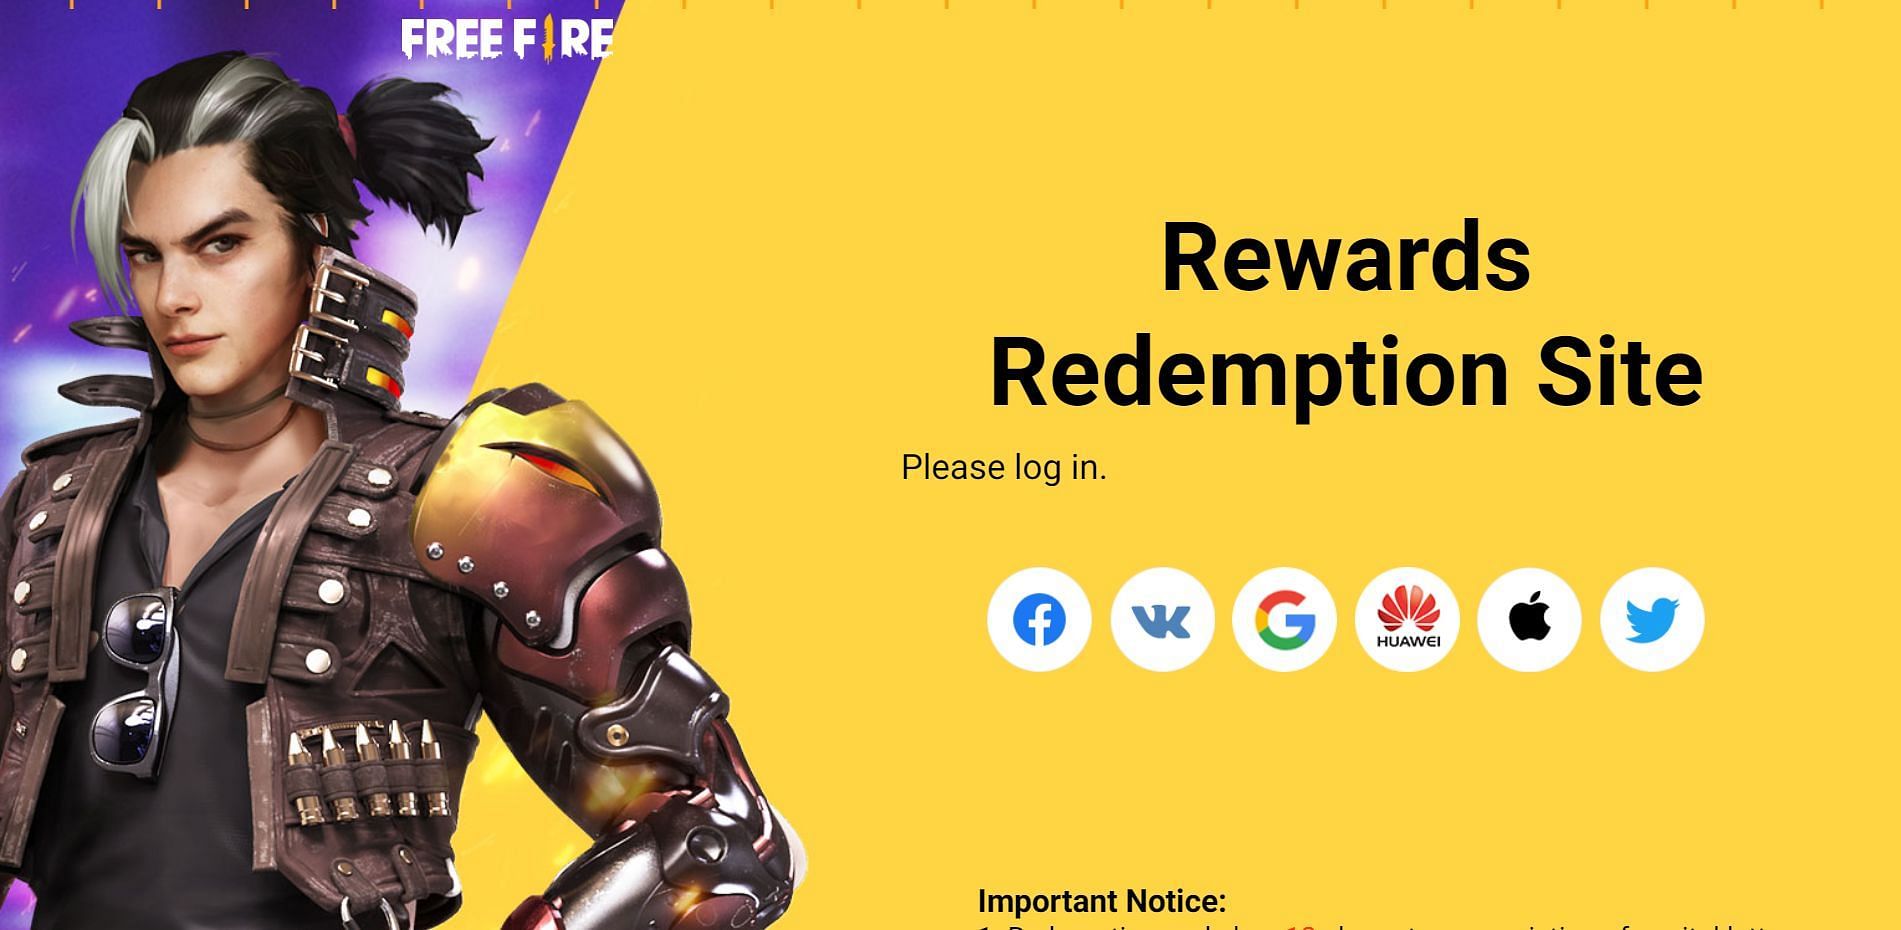 Redemption site (Image via Free Fire)